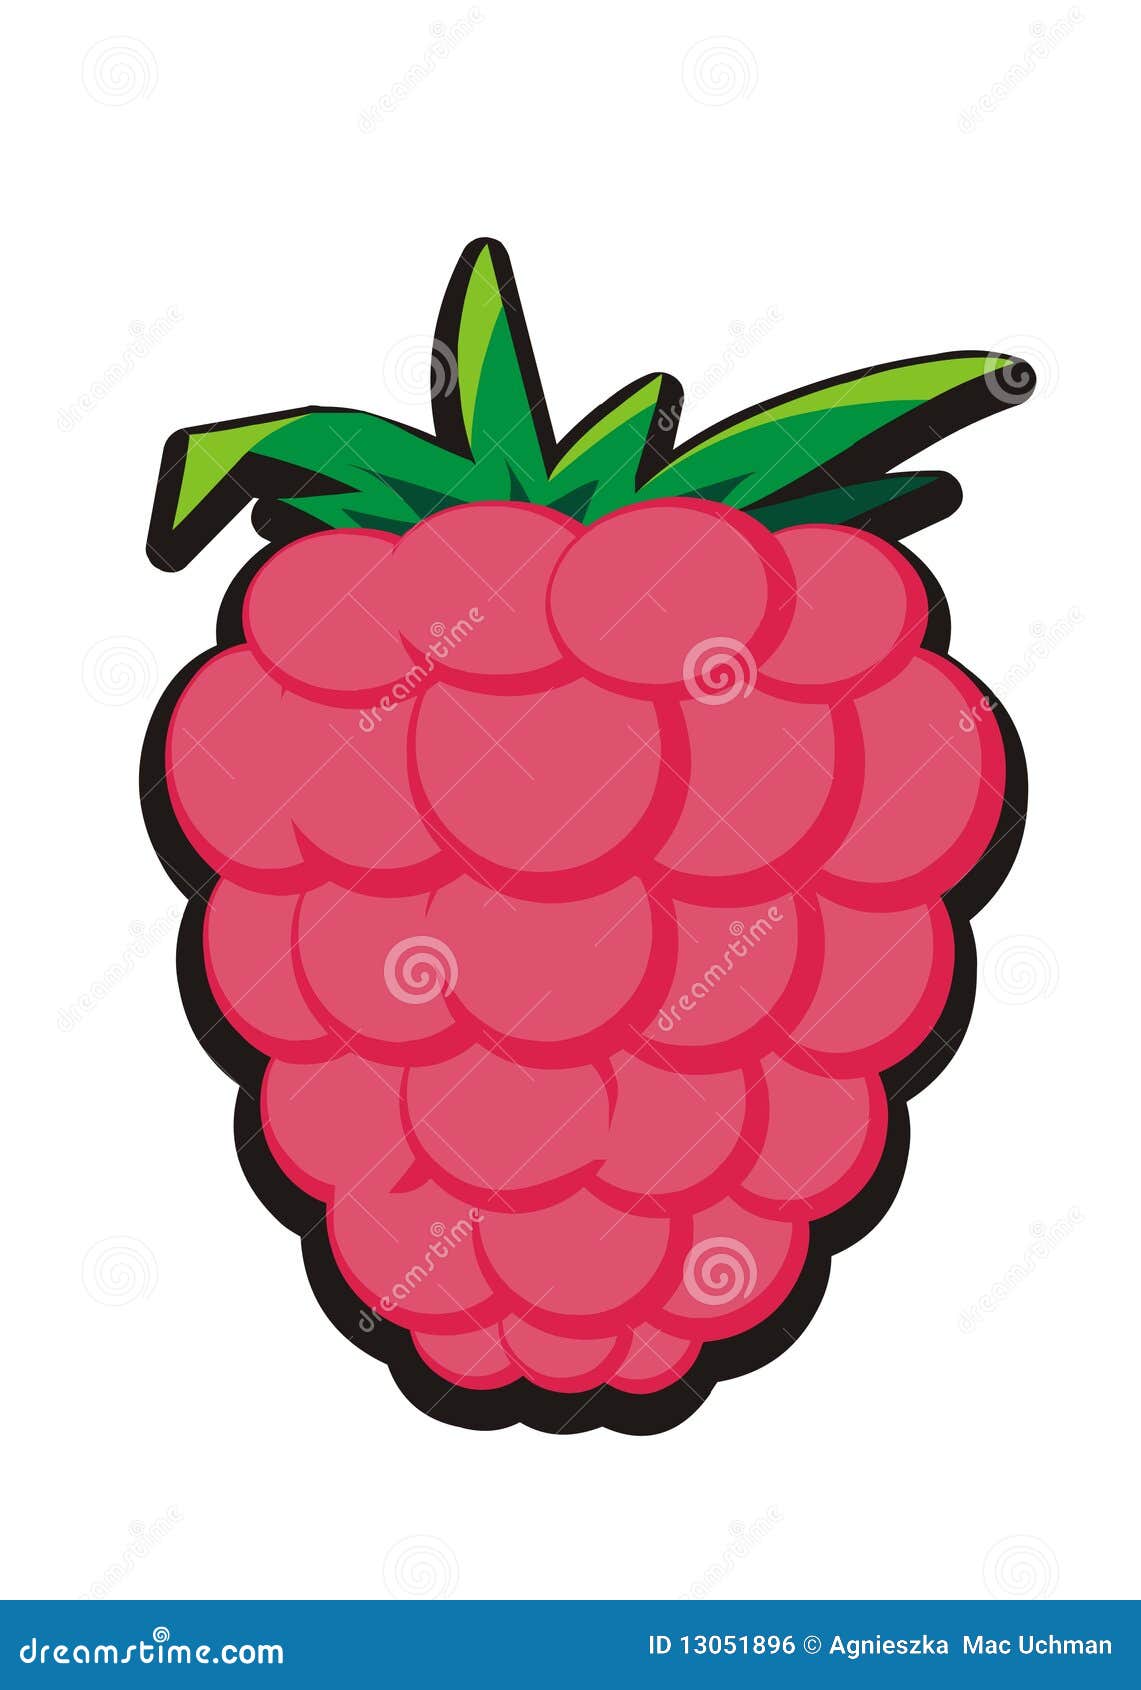 Raspberry stock illustration. Illustration of cartoons - 13051896